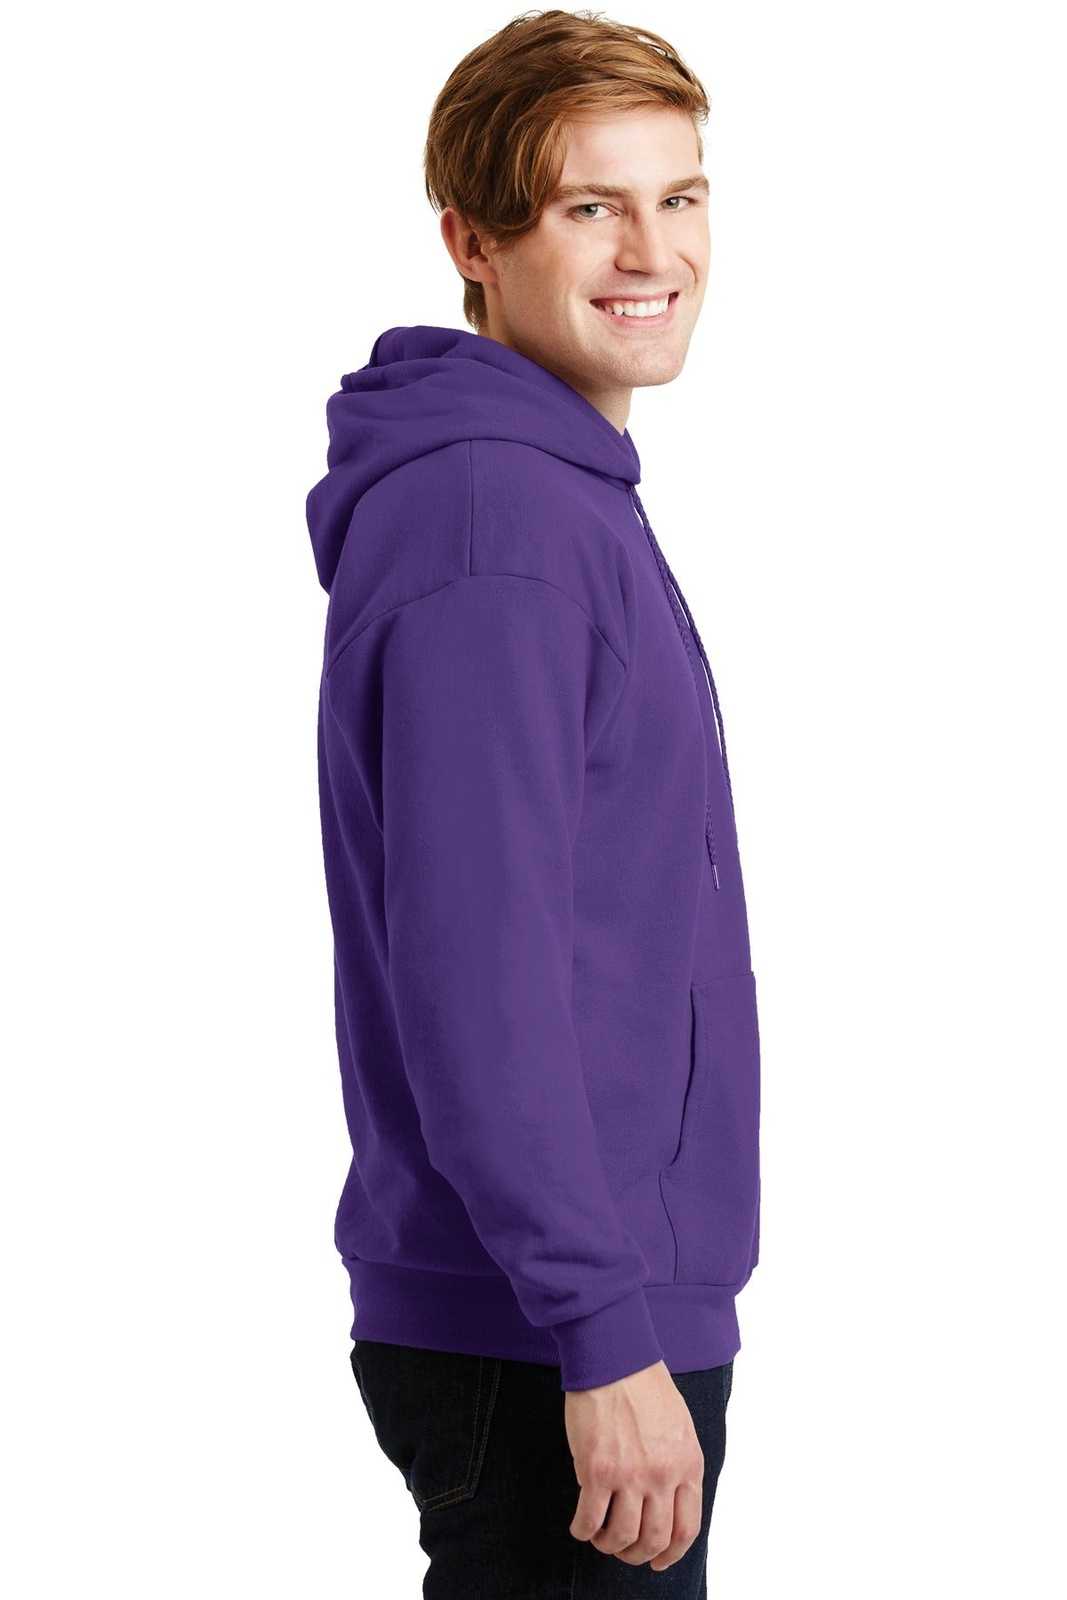 Hanes P170 Ecosmart Pullover Hooded Sweatshirt - Purple - HIT a Double